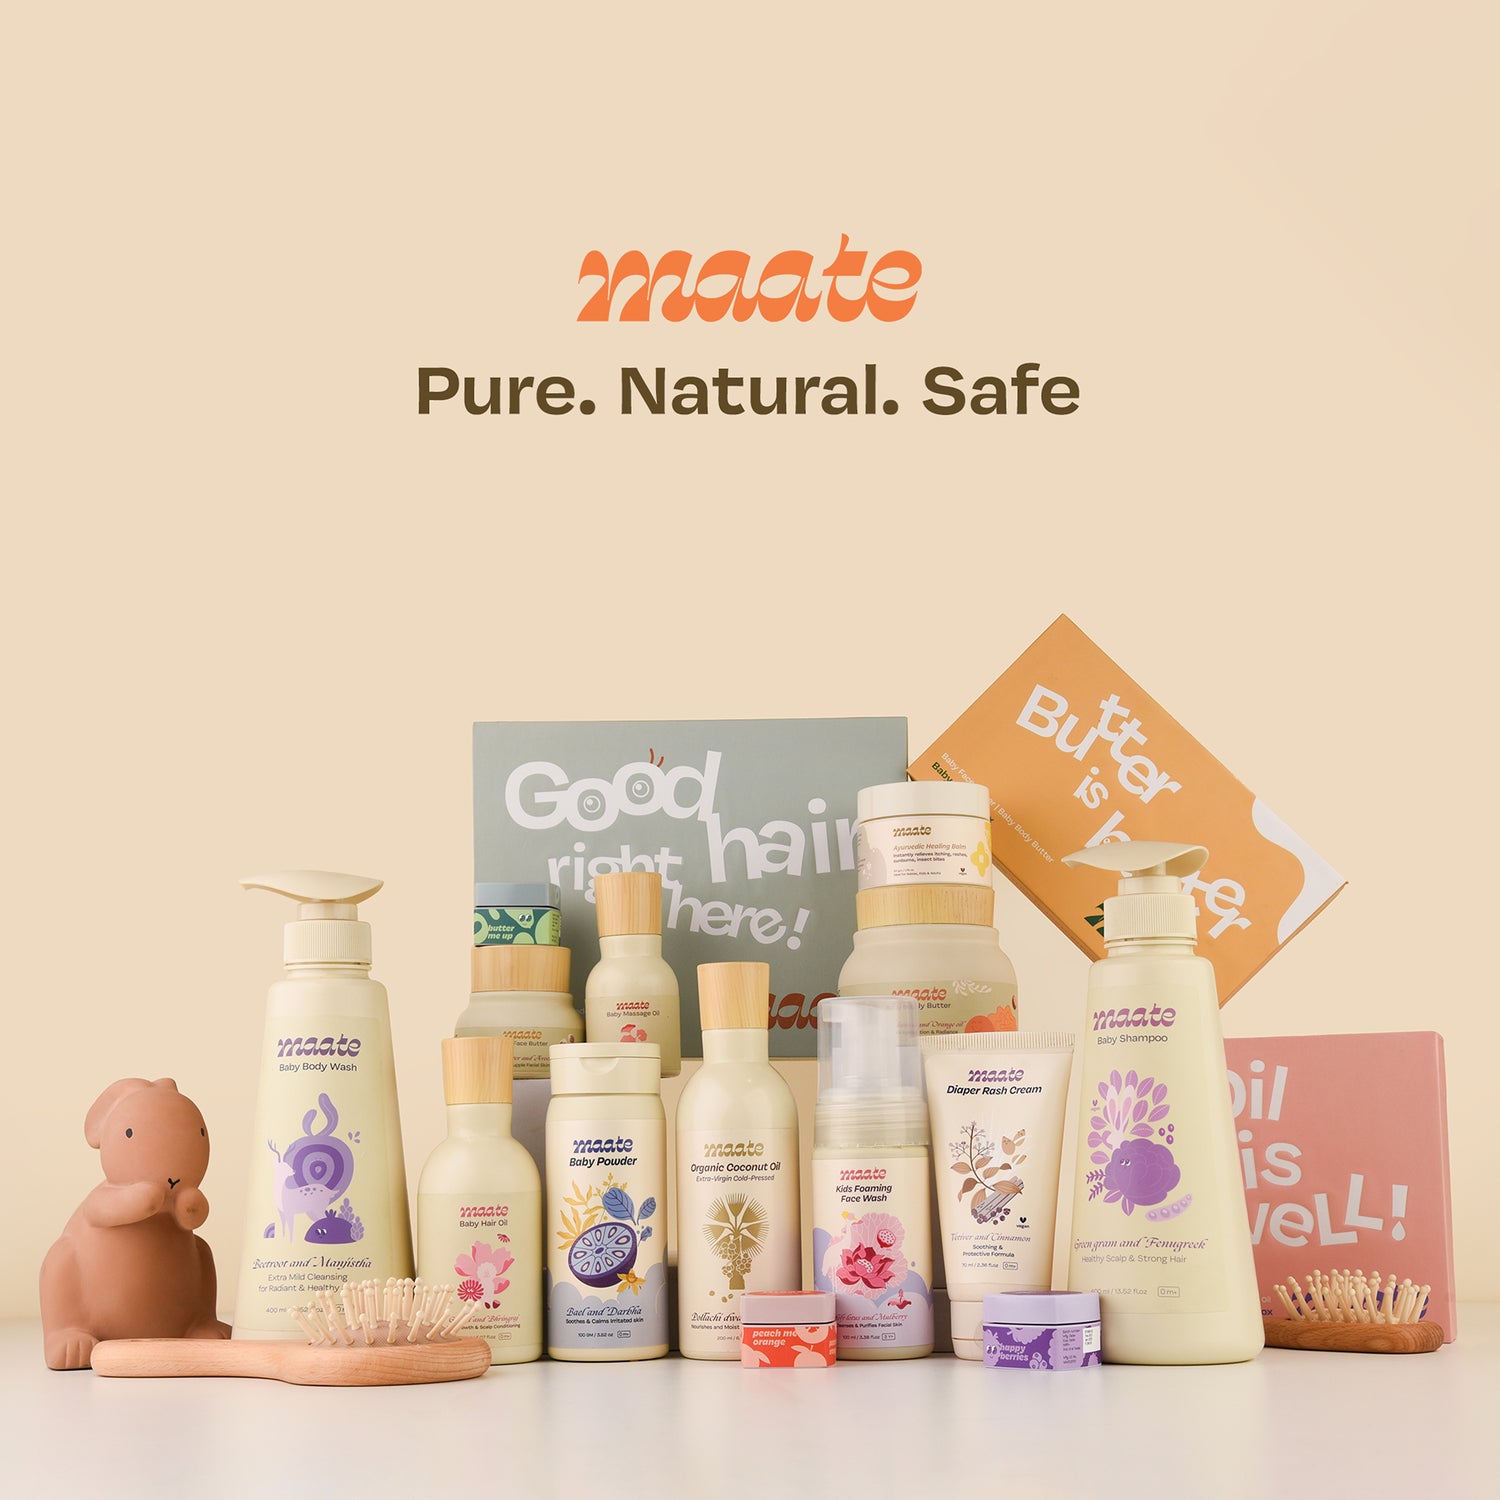 Tear Free Baby Shampoo - ph Balanced | Soap Free - 400 ML